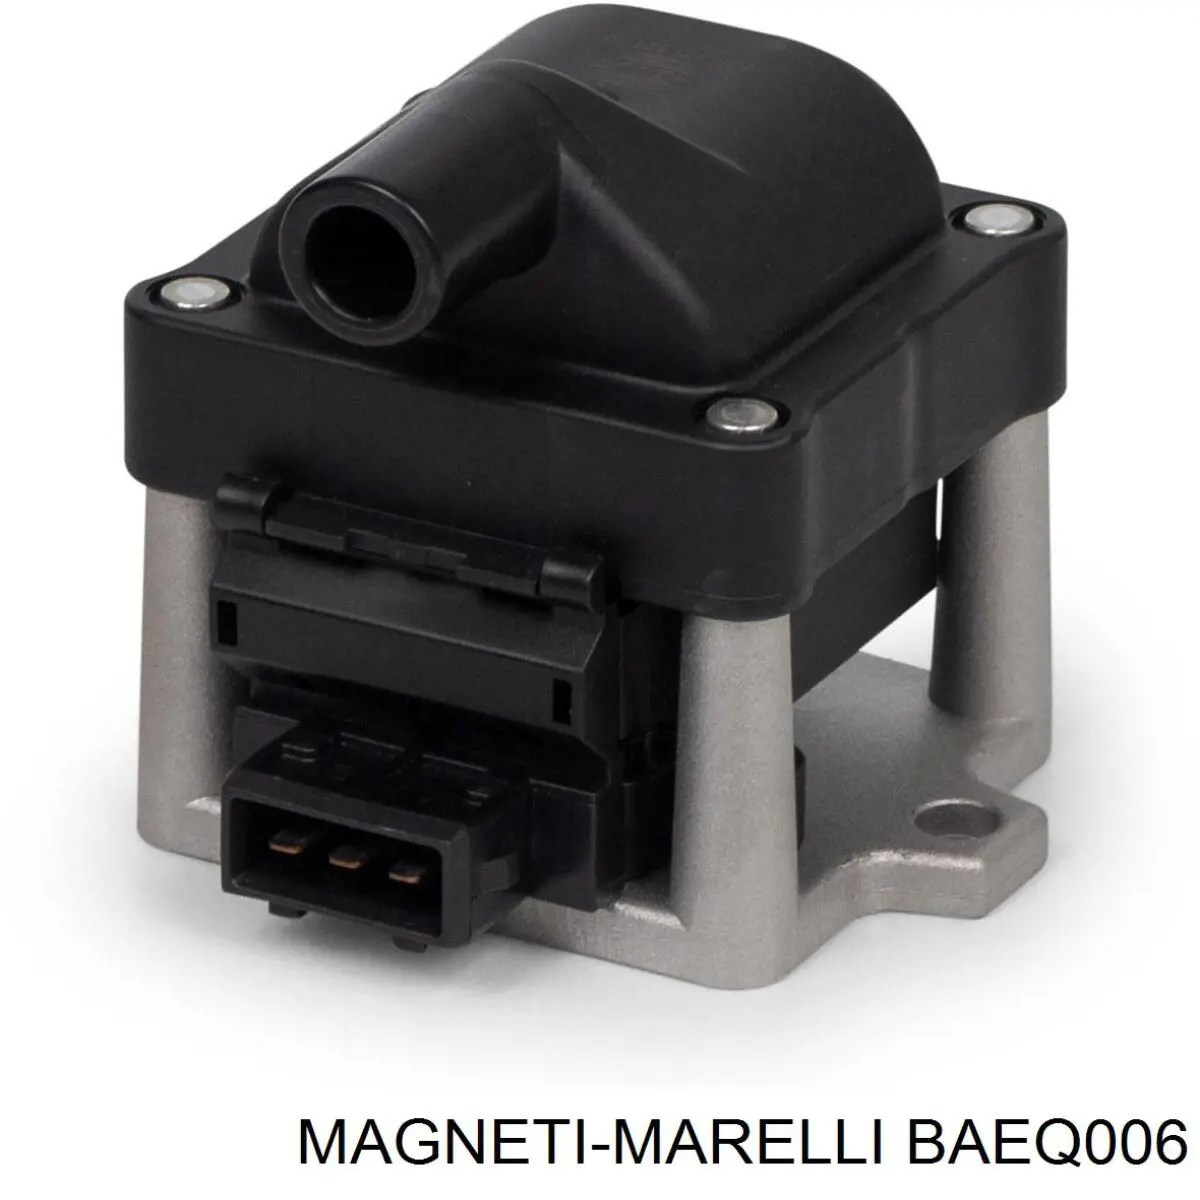 BAEQ006 Magneti Marelli bobina